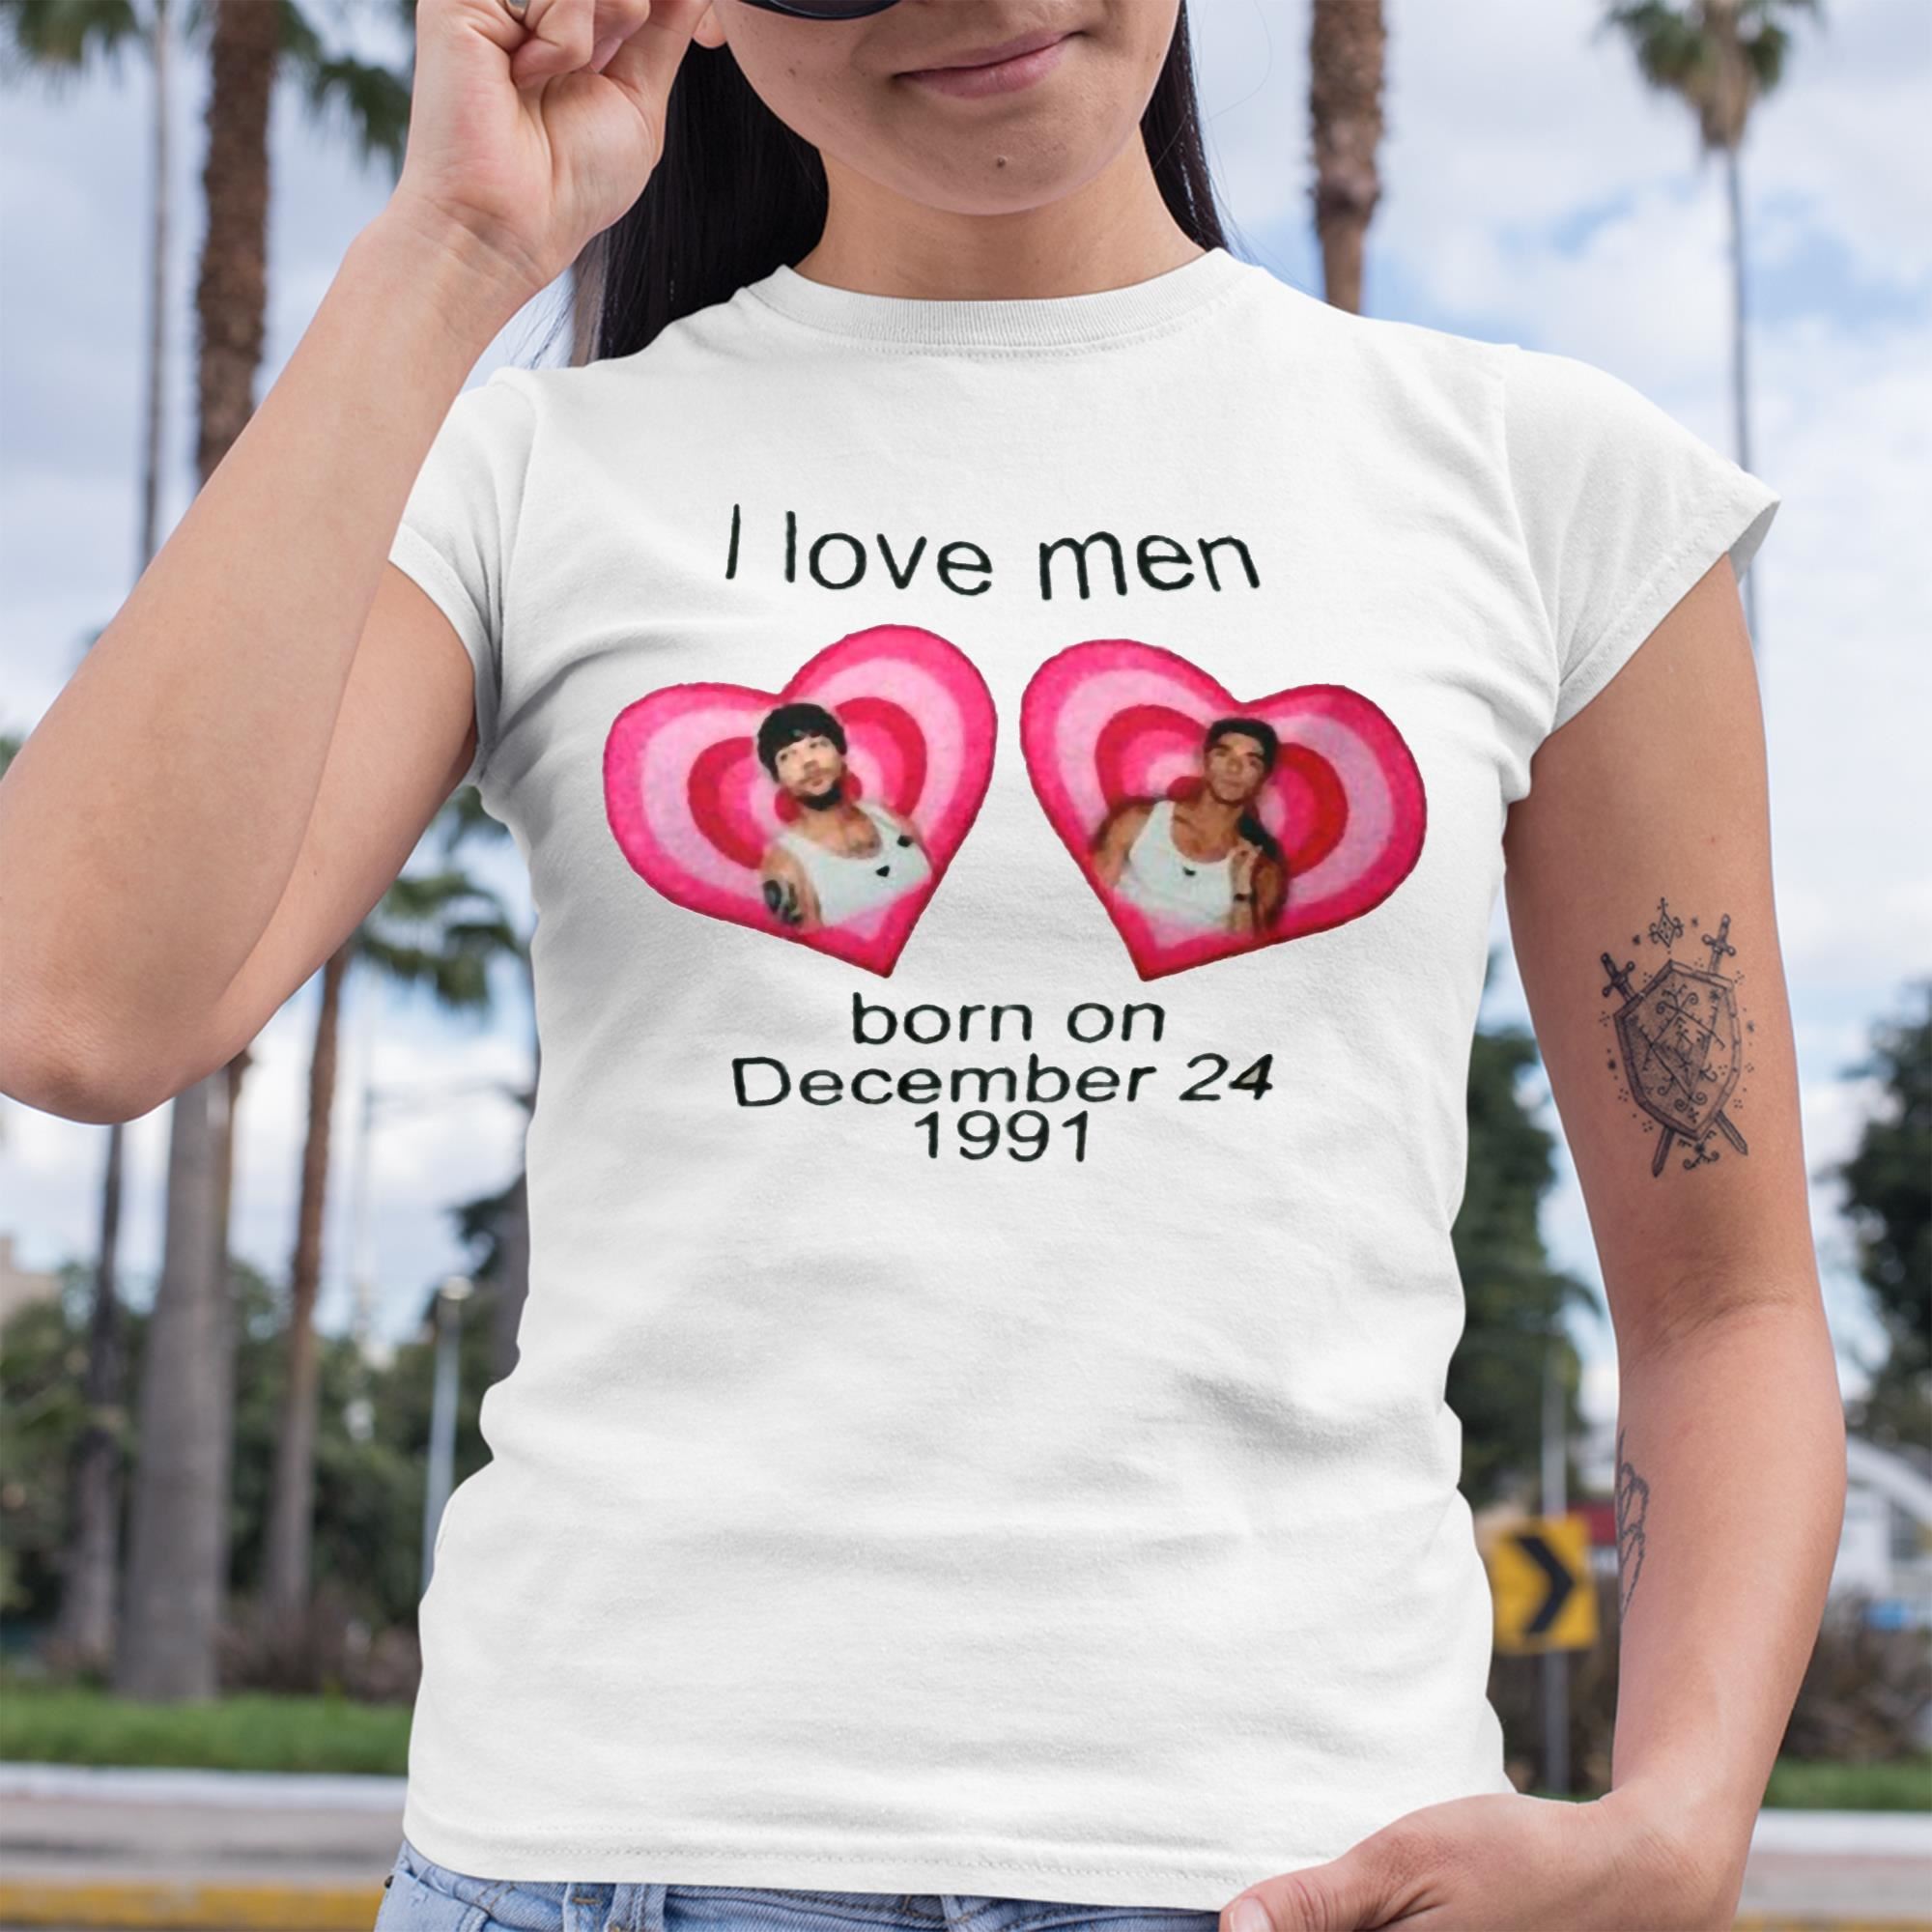 Ipeepz I Love Men Born on December 24 1991 Louis Tomlinson Shirt